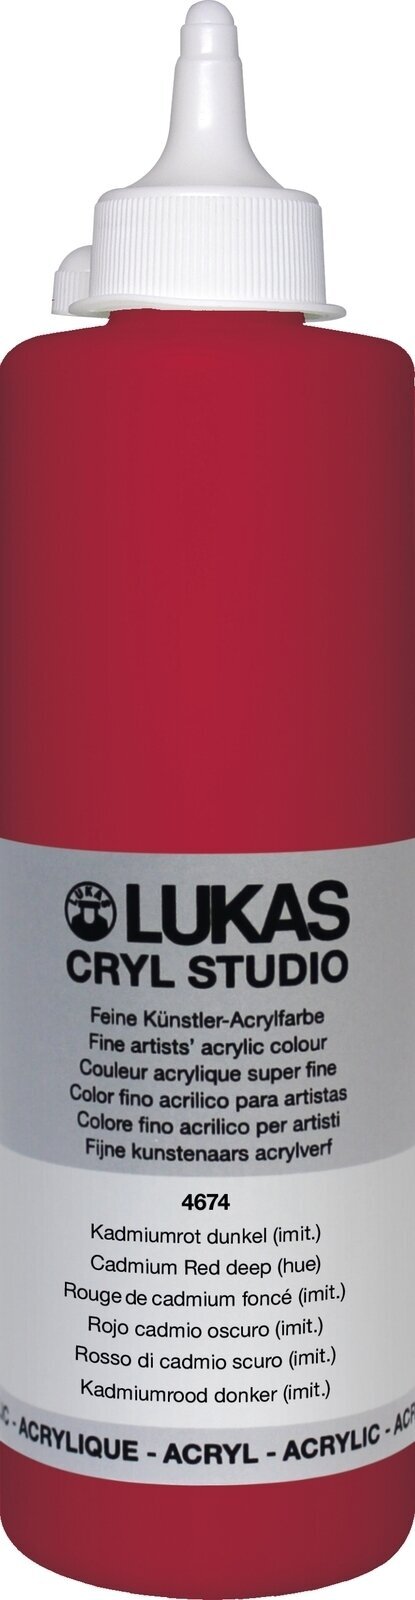 Acrylic Paint Lukas Cryl Studio Acrylic Paint 500 ml Cadmium Red Deep Hue